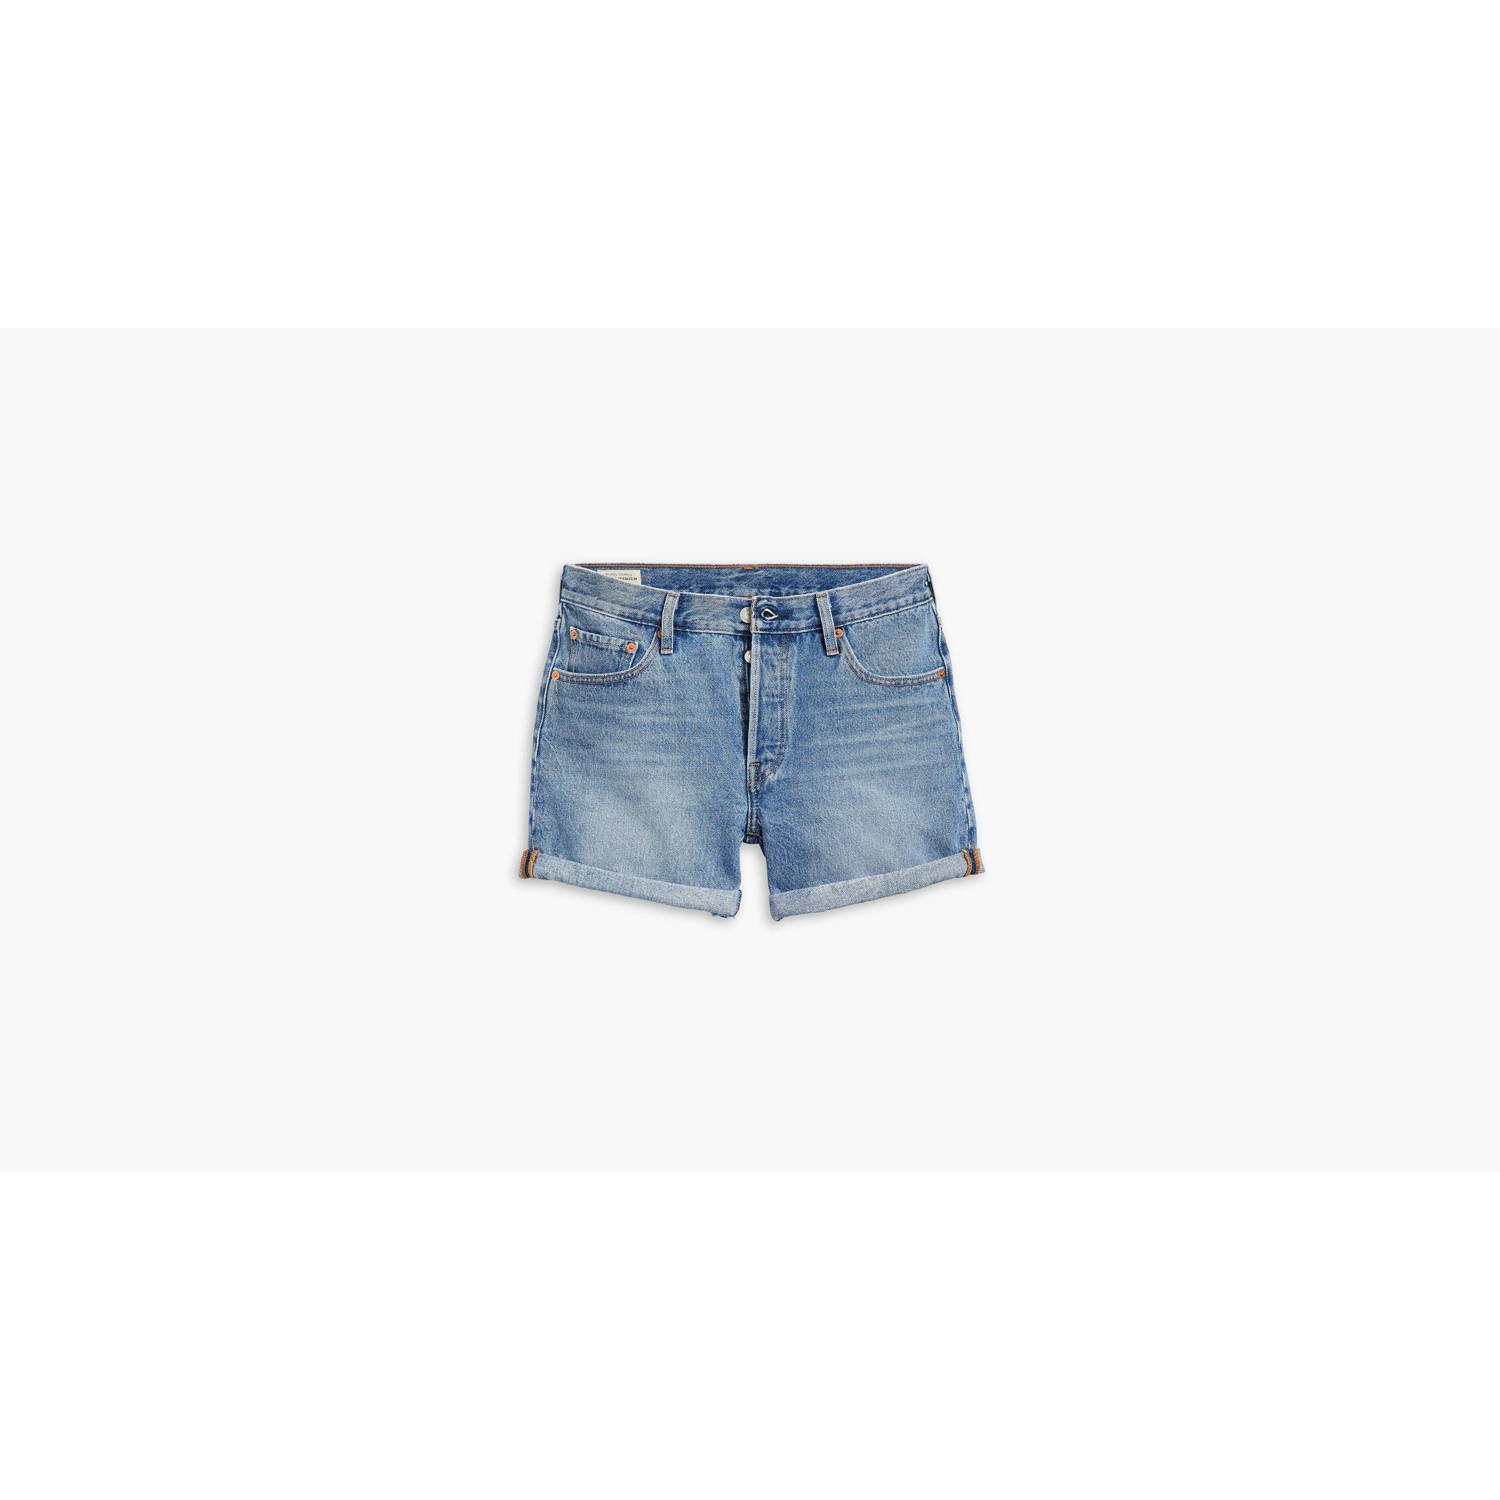 Levi's 501 high waist straight fit jeans short light blue denim